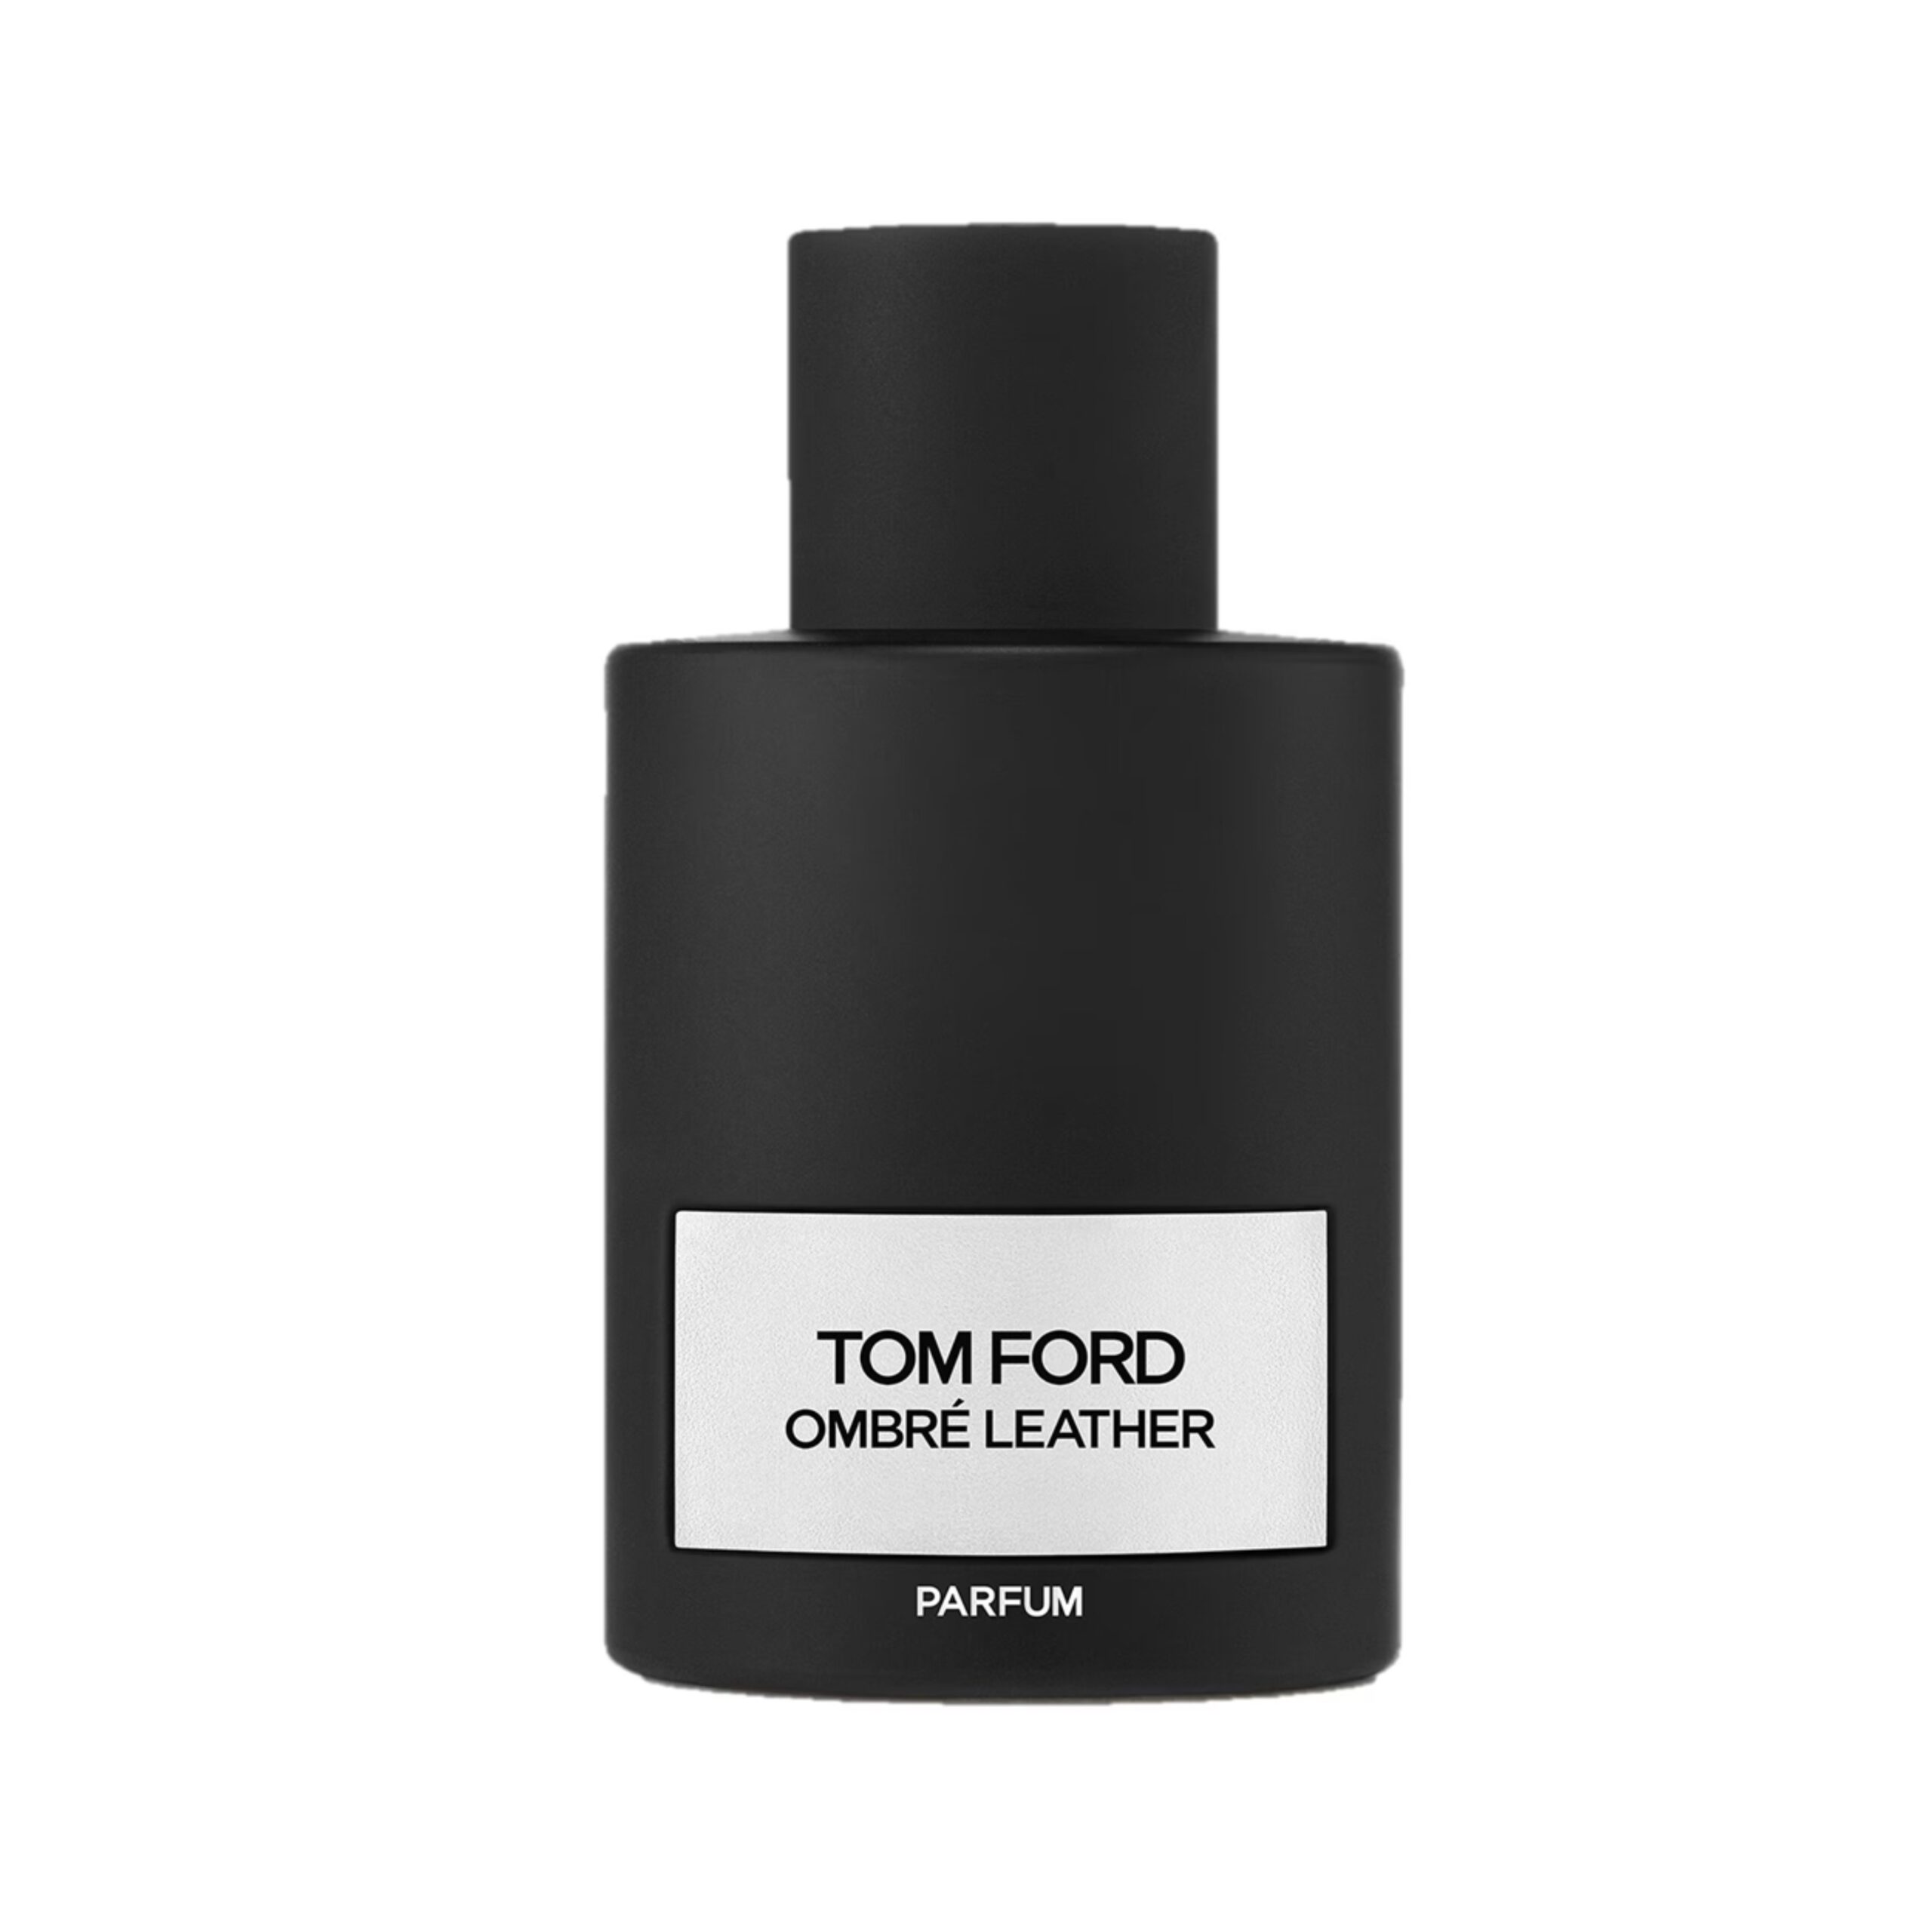 Tom Ford Ombre Leather Parfum 100ml - Alinjazperfumes